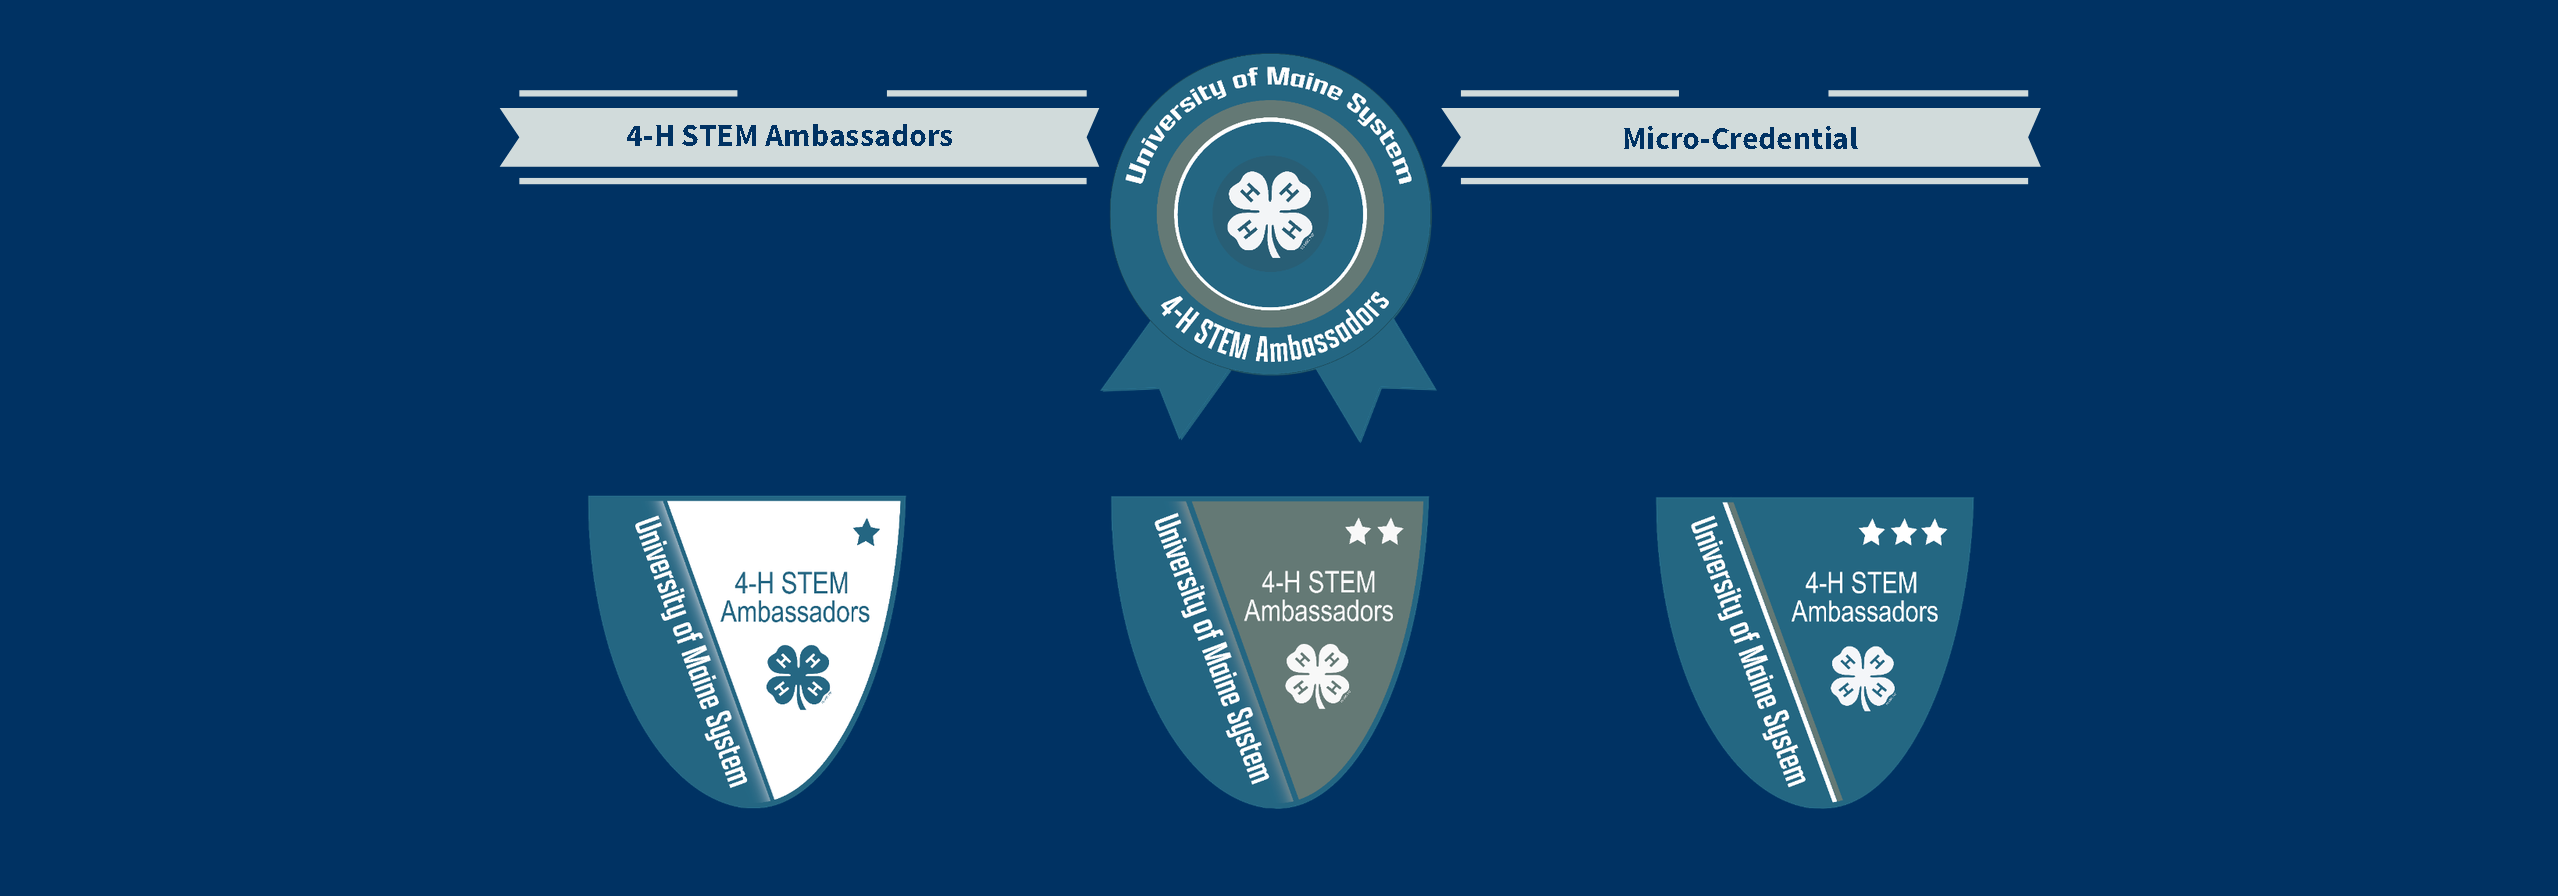 4-H STEM Ambassadors Micro-Credentials; University of Maine System 4-H STEM Ambassadors, Digital Badges level 1, 2, 3